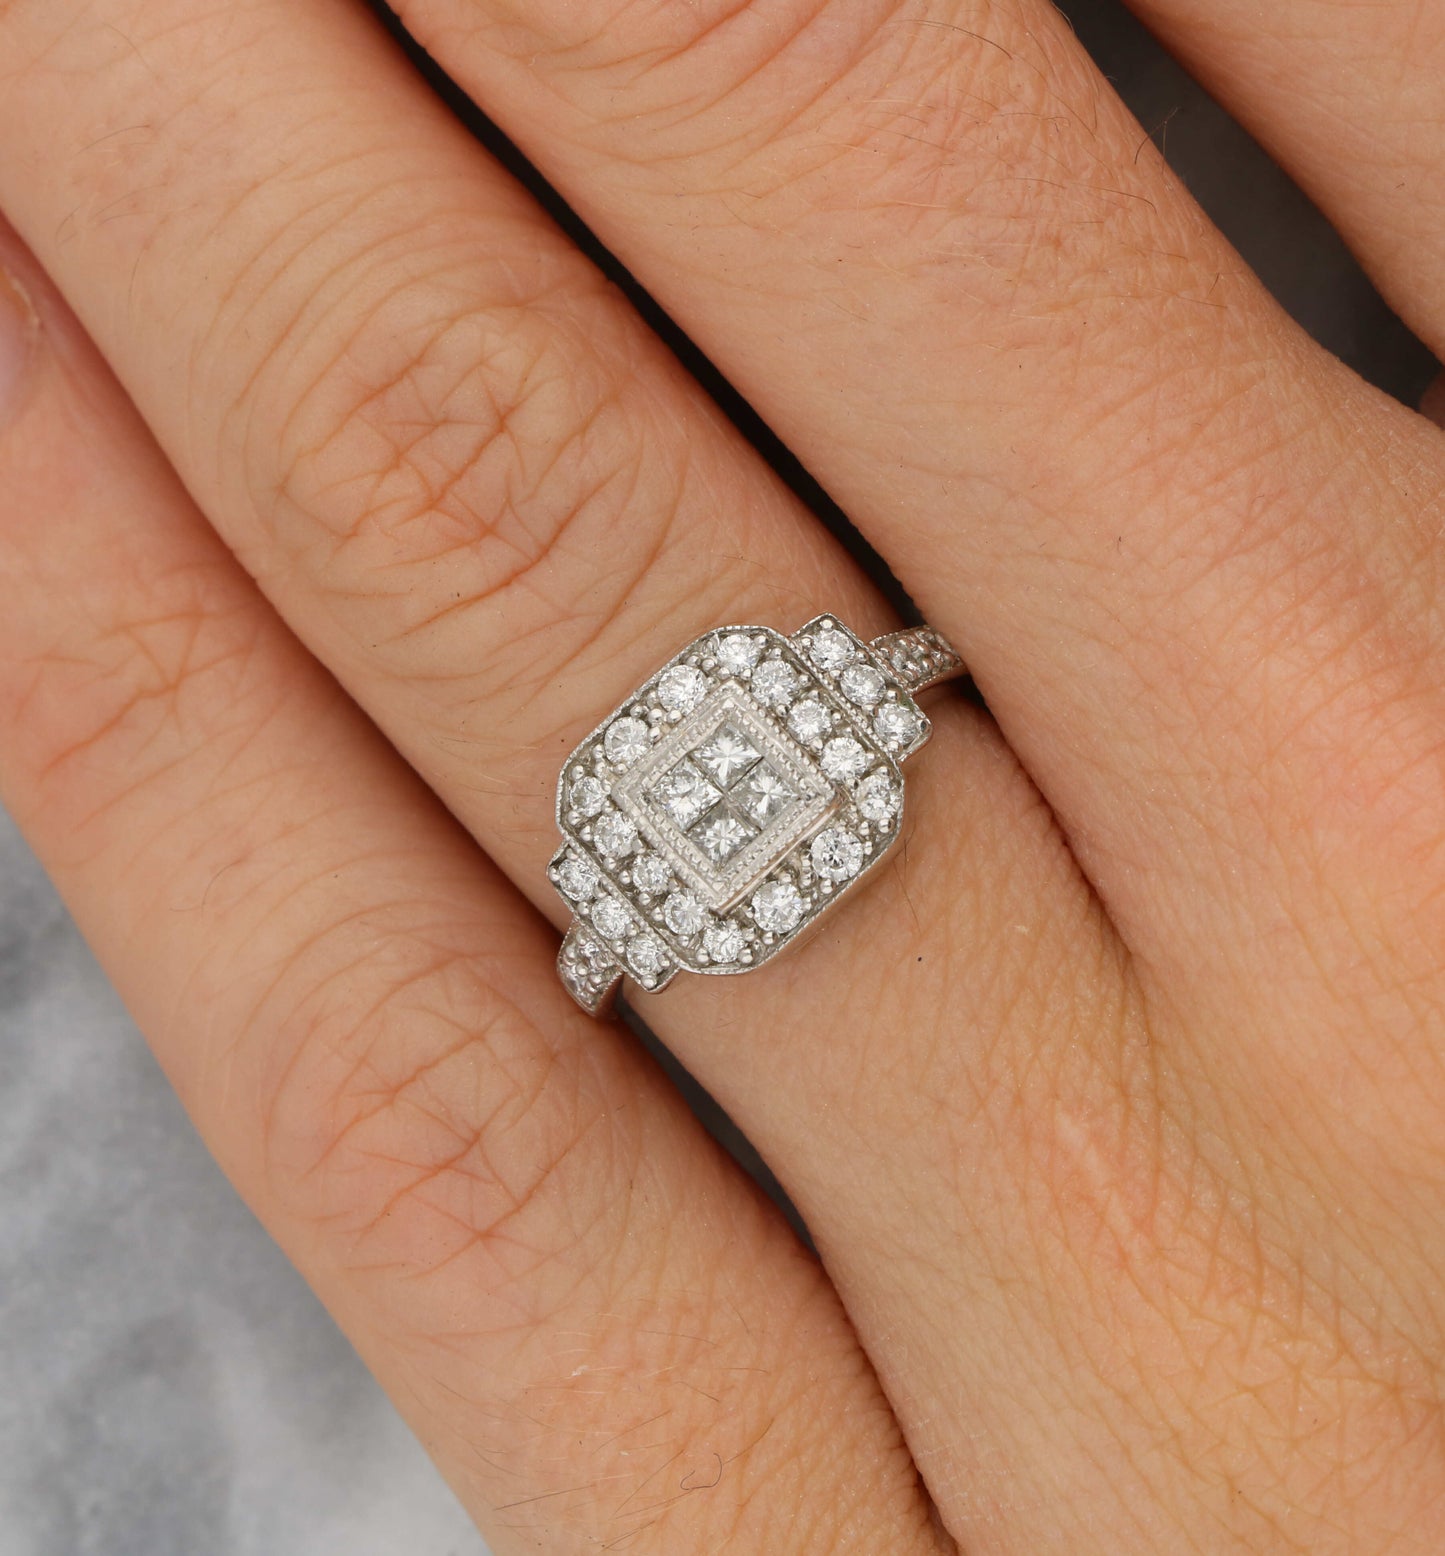 Princess-cut diamond cluster ring